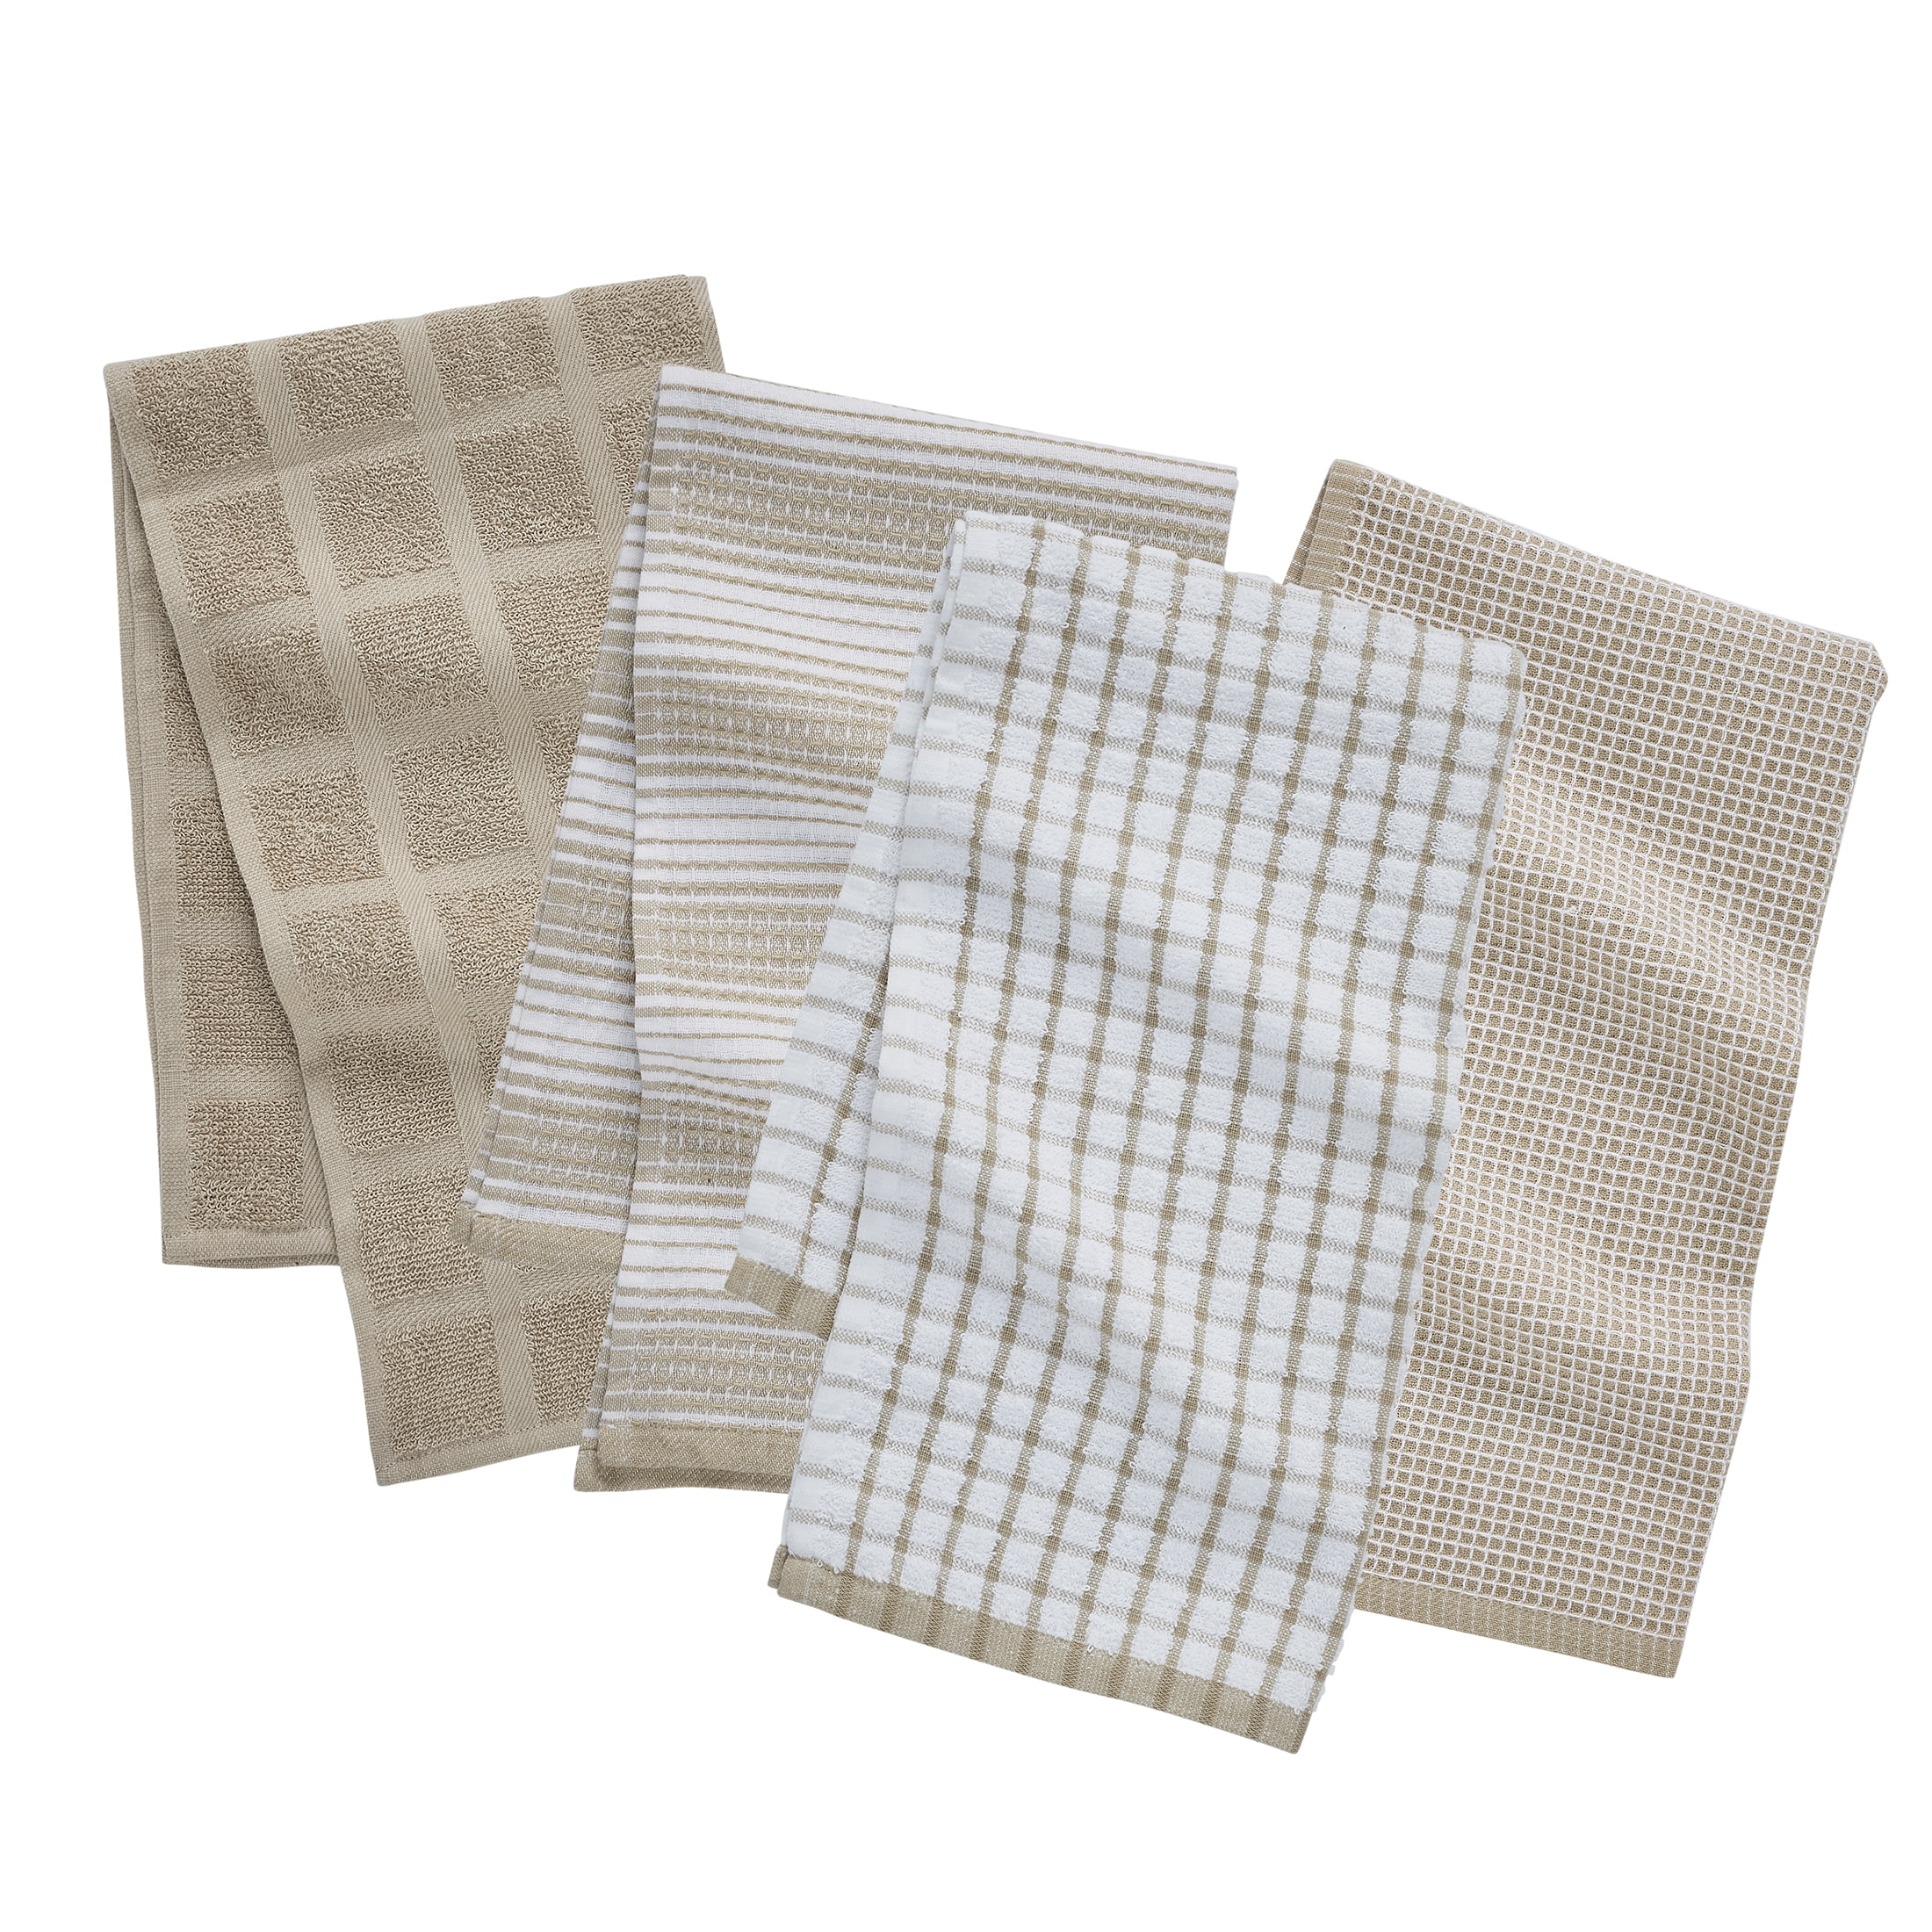 4PK/8PK 100% Cotton Tea Towel Thick Kitchen Linen Dish Cloth